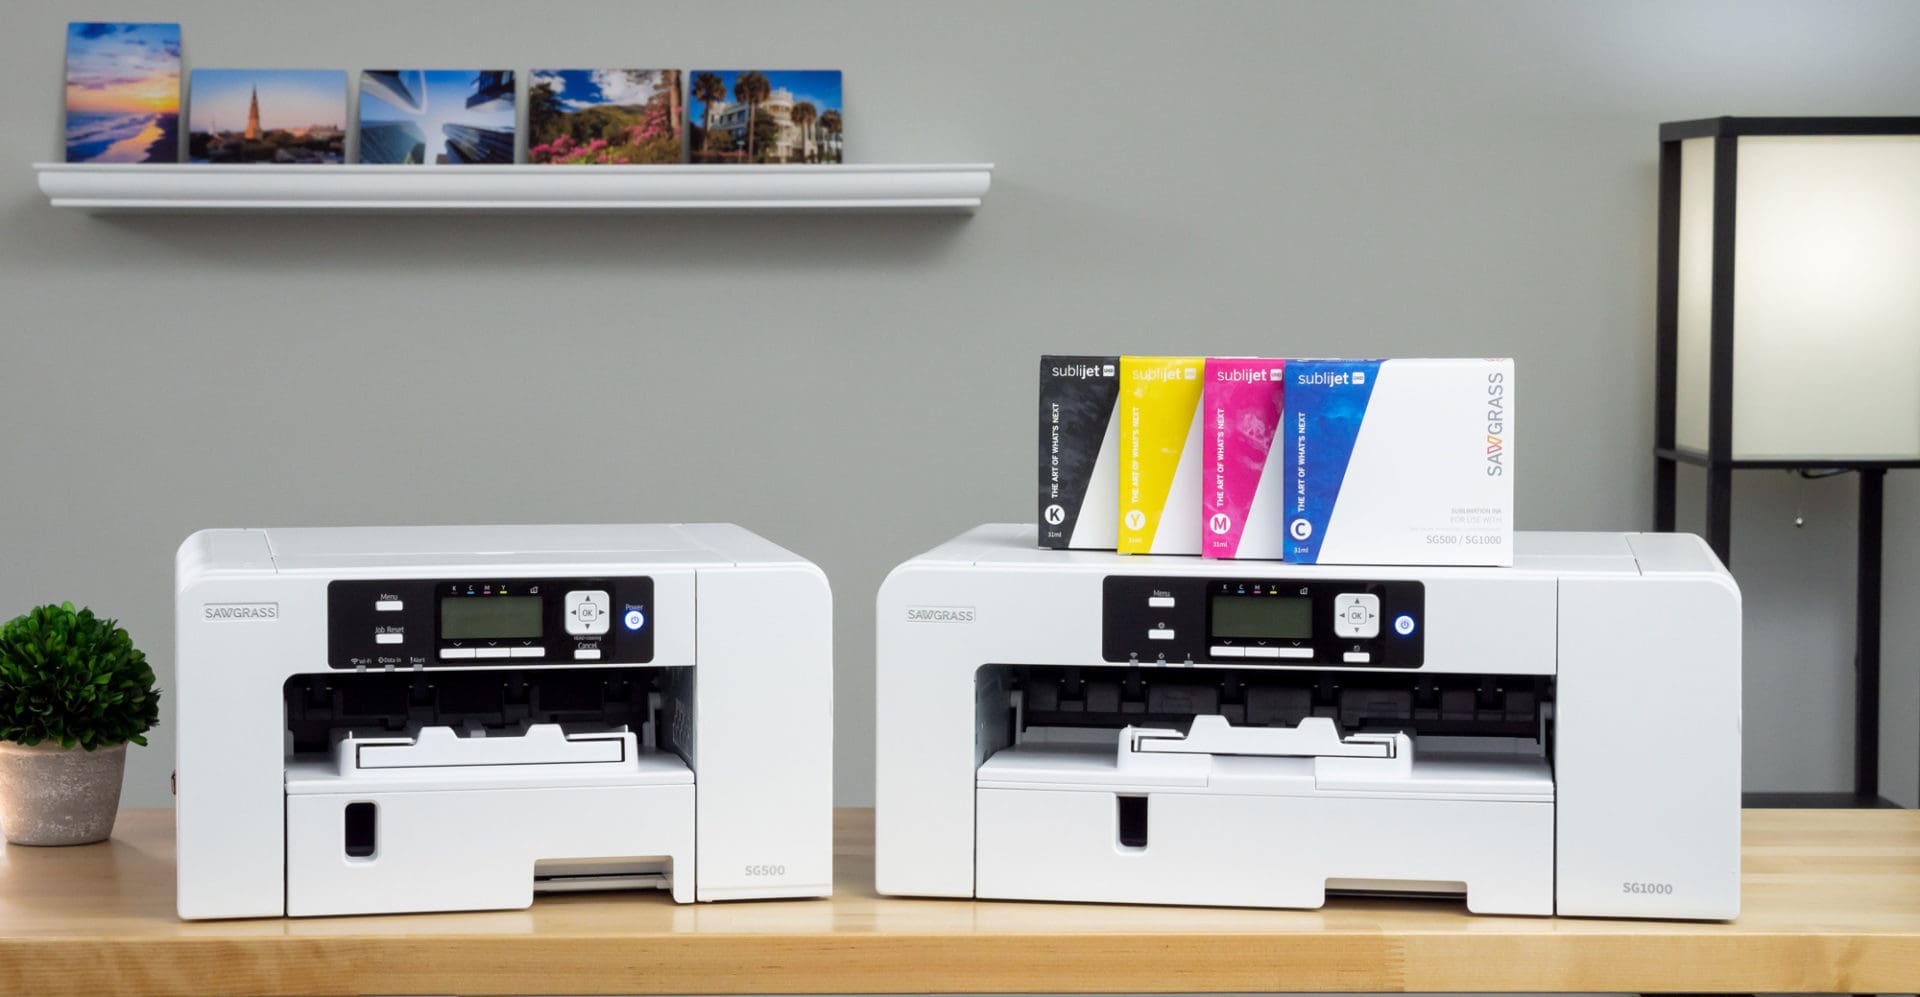 Sawgrass SG500/SG1000 printers